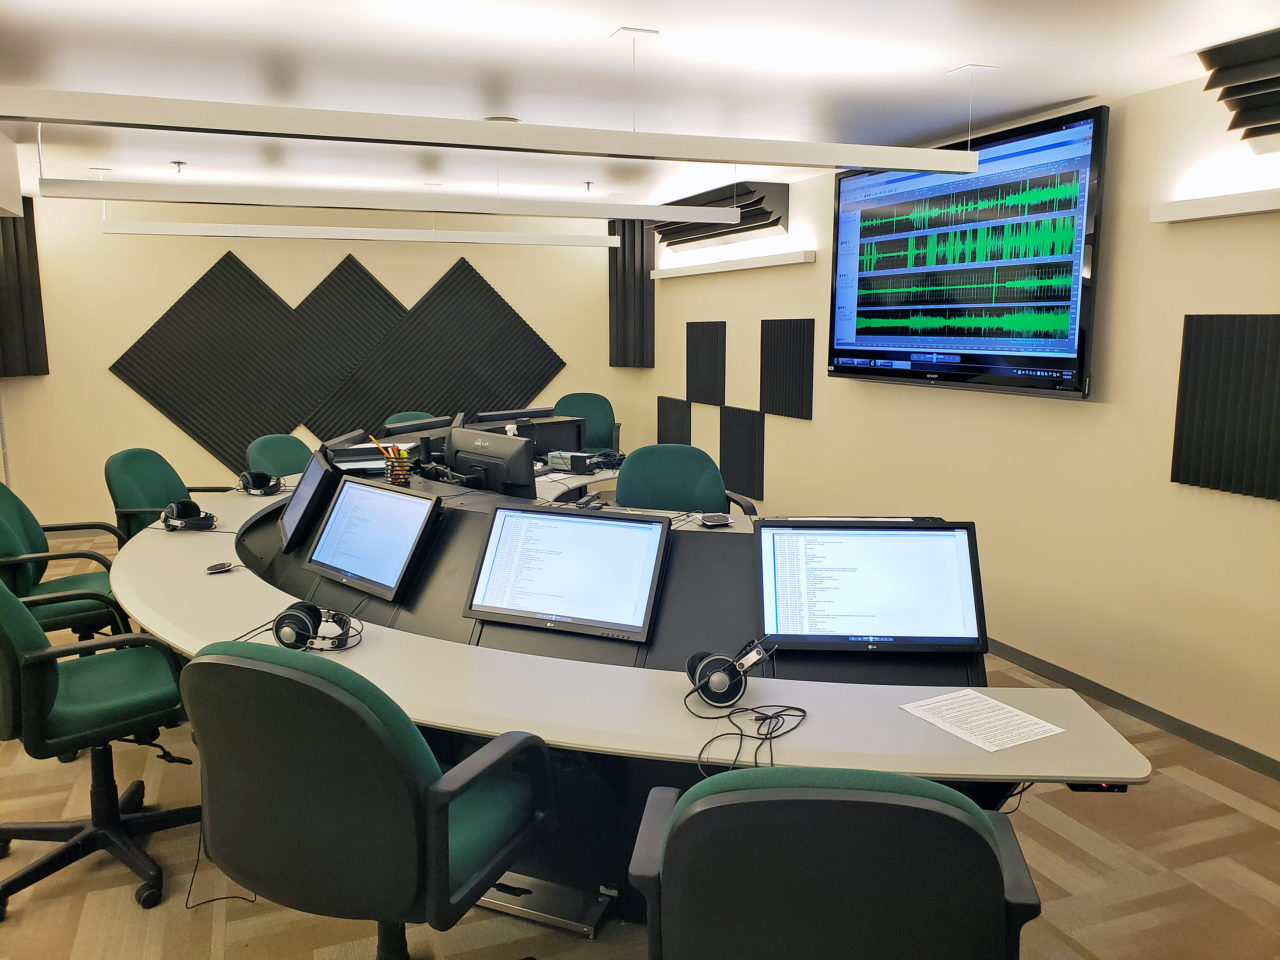 The listening room at NTSB headquarters. (Nick Zazulia)